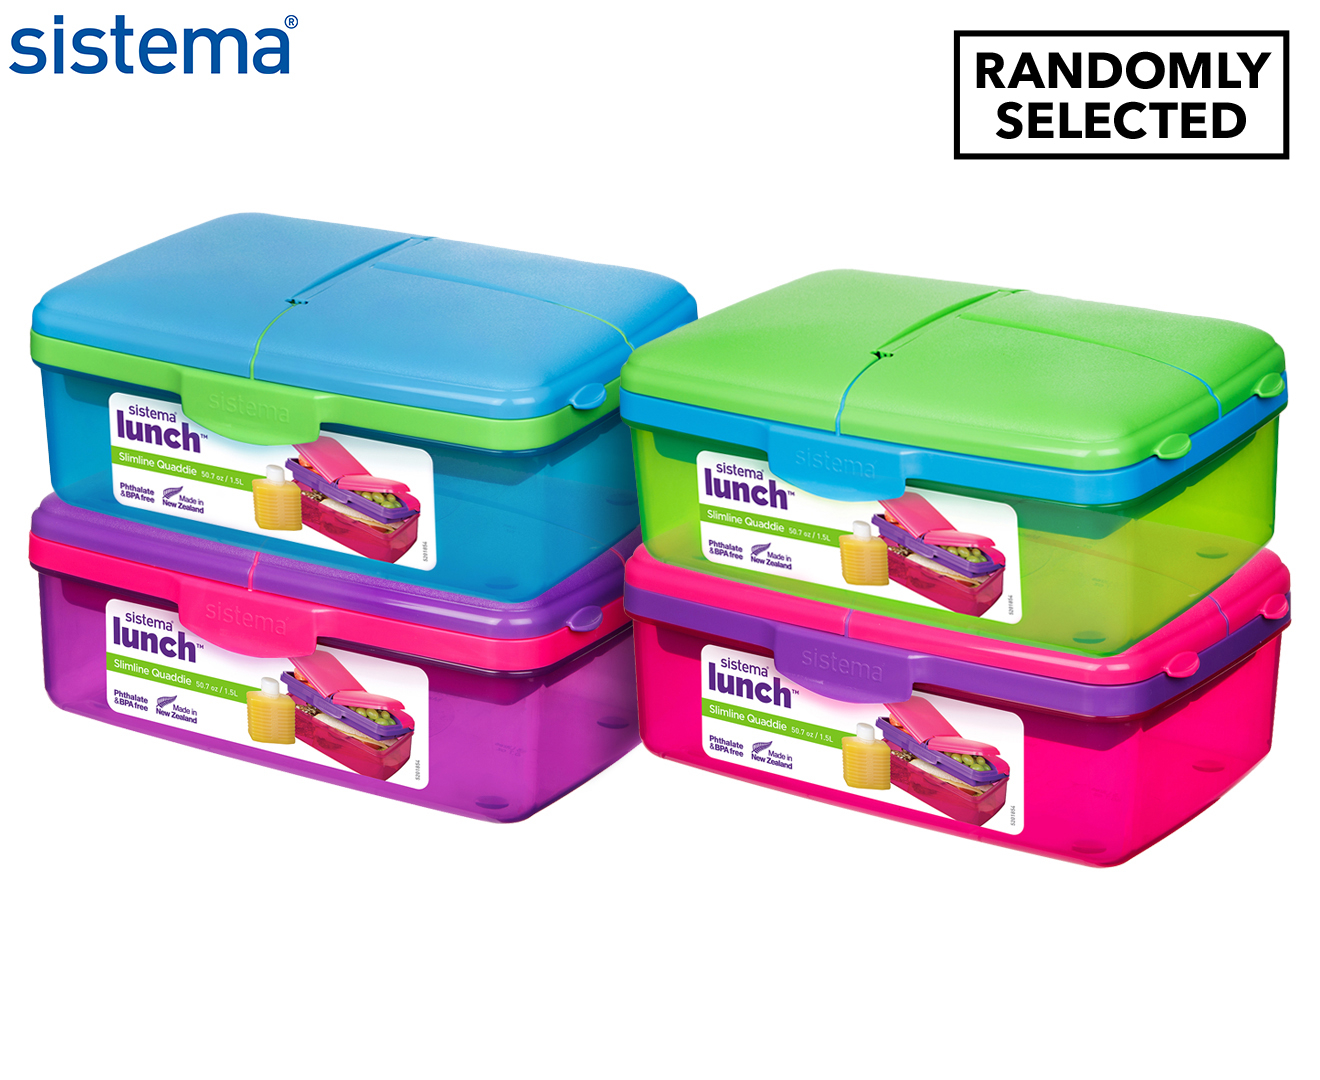 Sistema 1.5L Slimline Quaddie Lunchbox - Randomly Selected